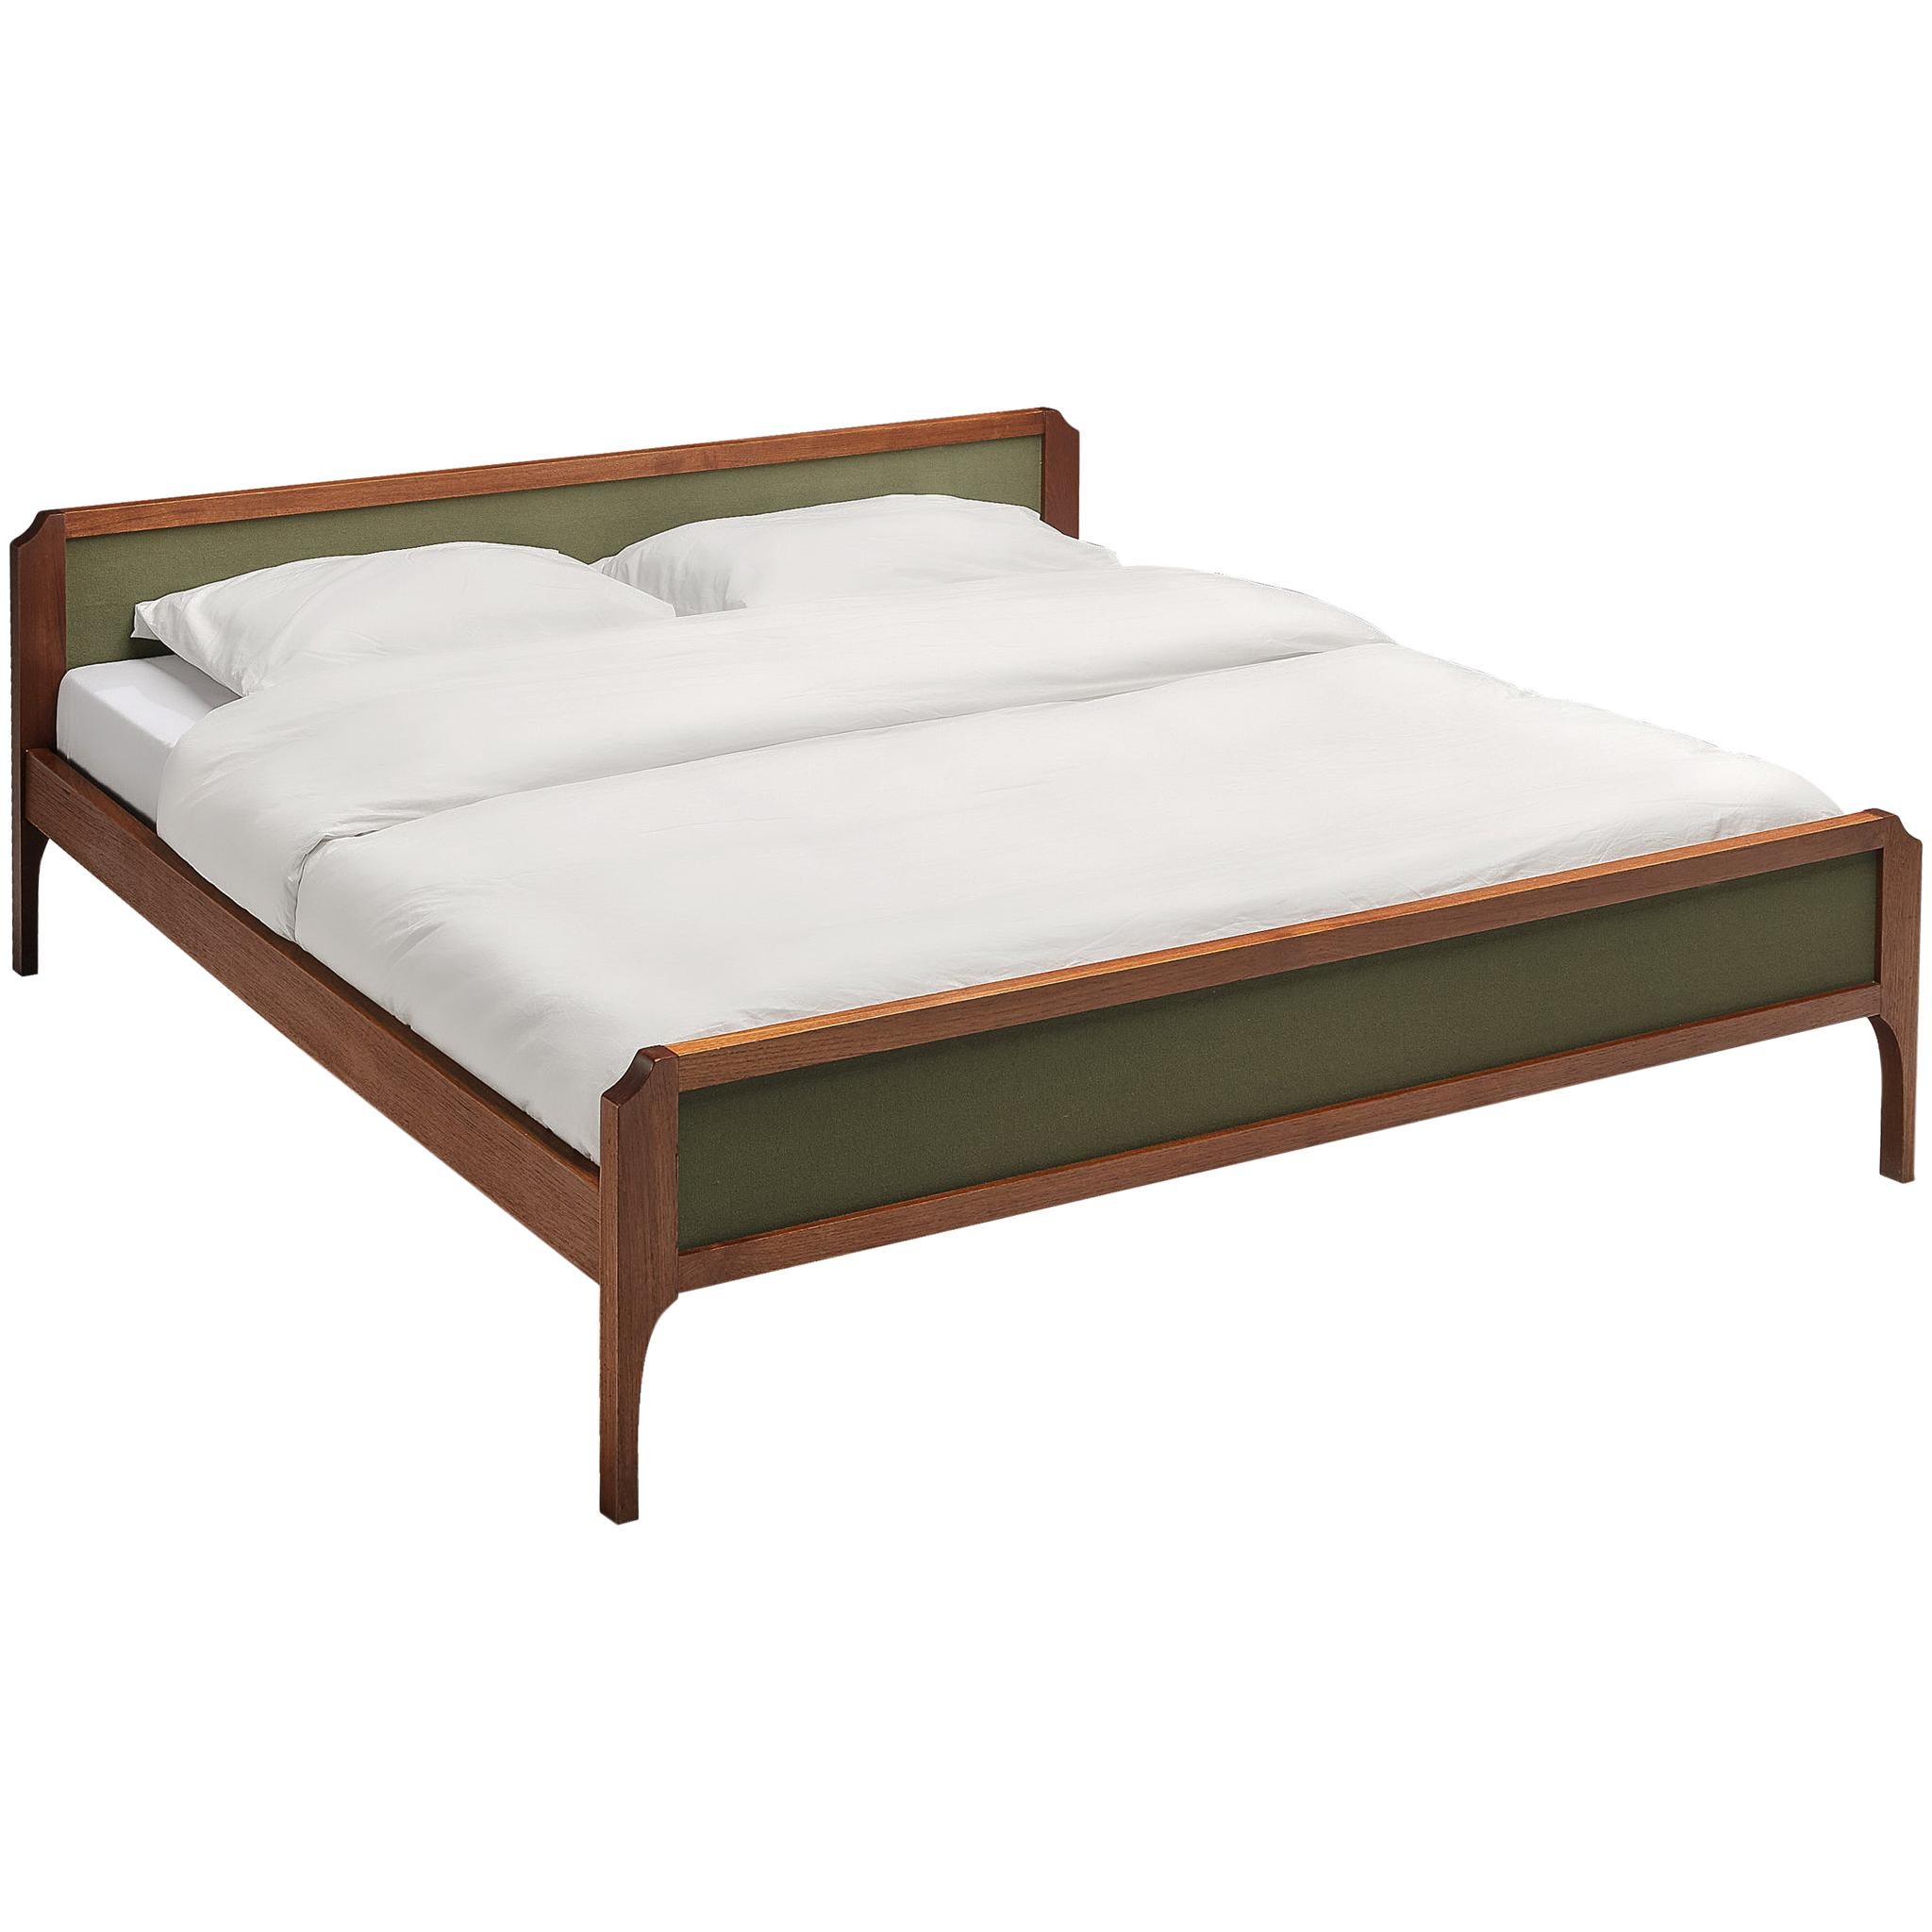 Elegant Italian Double Bed in Teak and Green Fabric